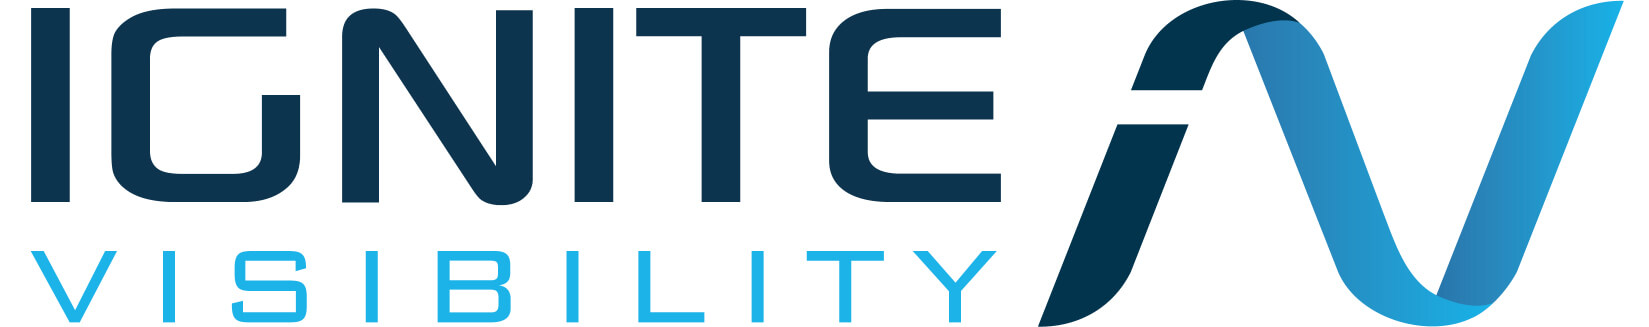 Best SEO Business Logo: Ignite Visibility